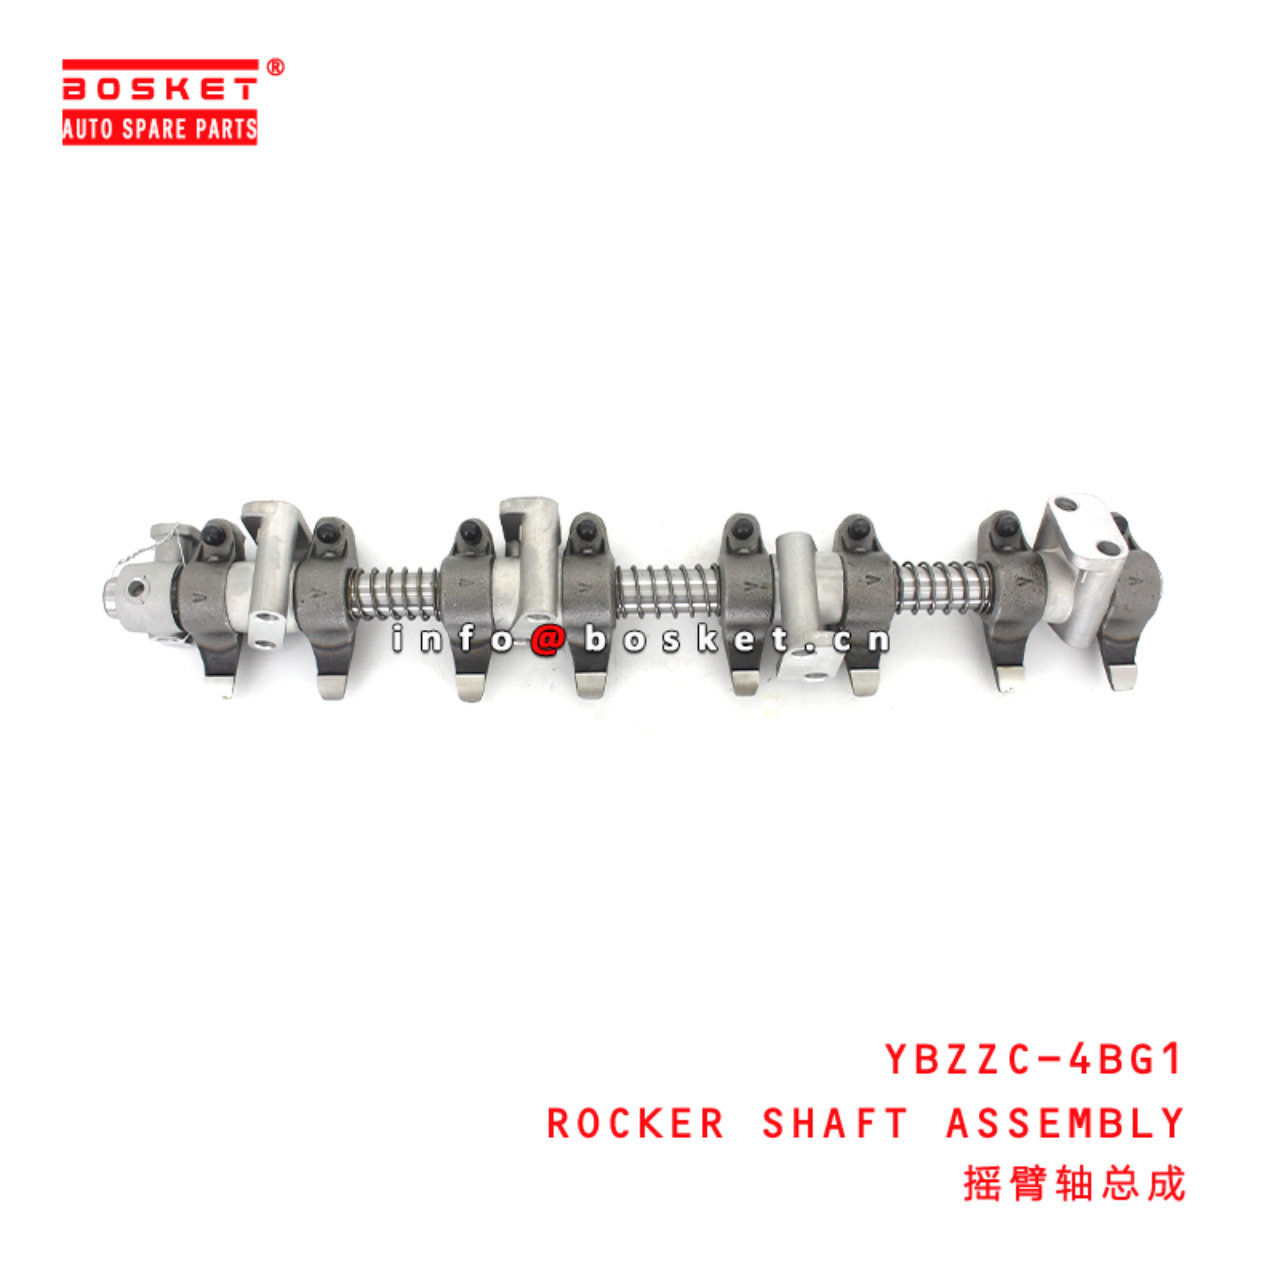 YBZZC-4BG1 Rocker Shaft Assembly suitable for ISUZU 4BG1 YBZZC-4BG1